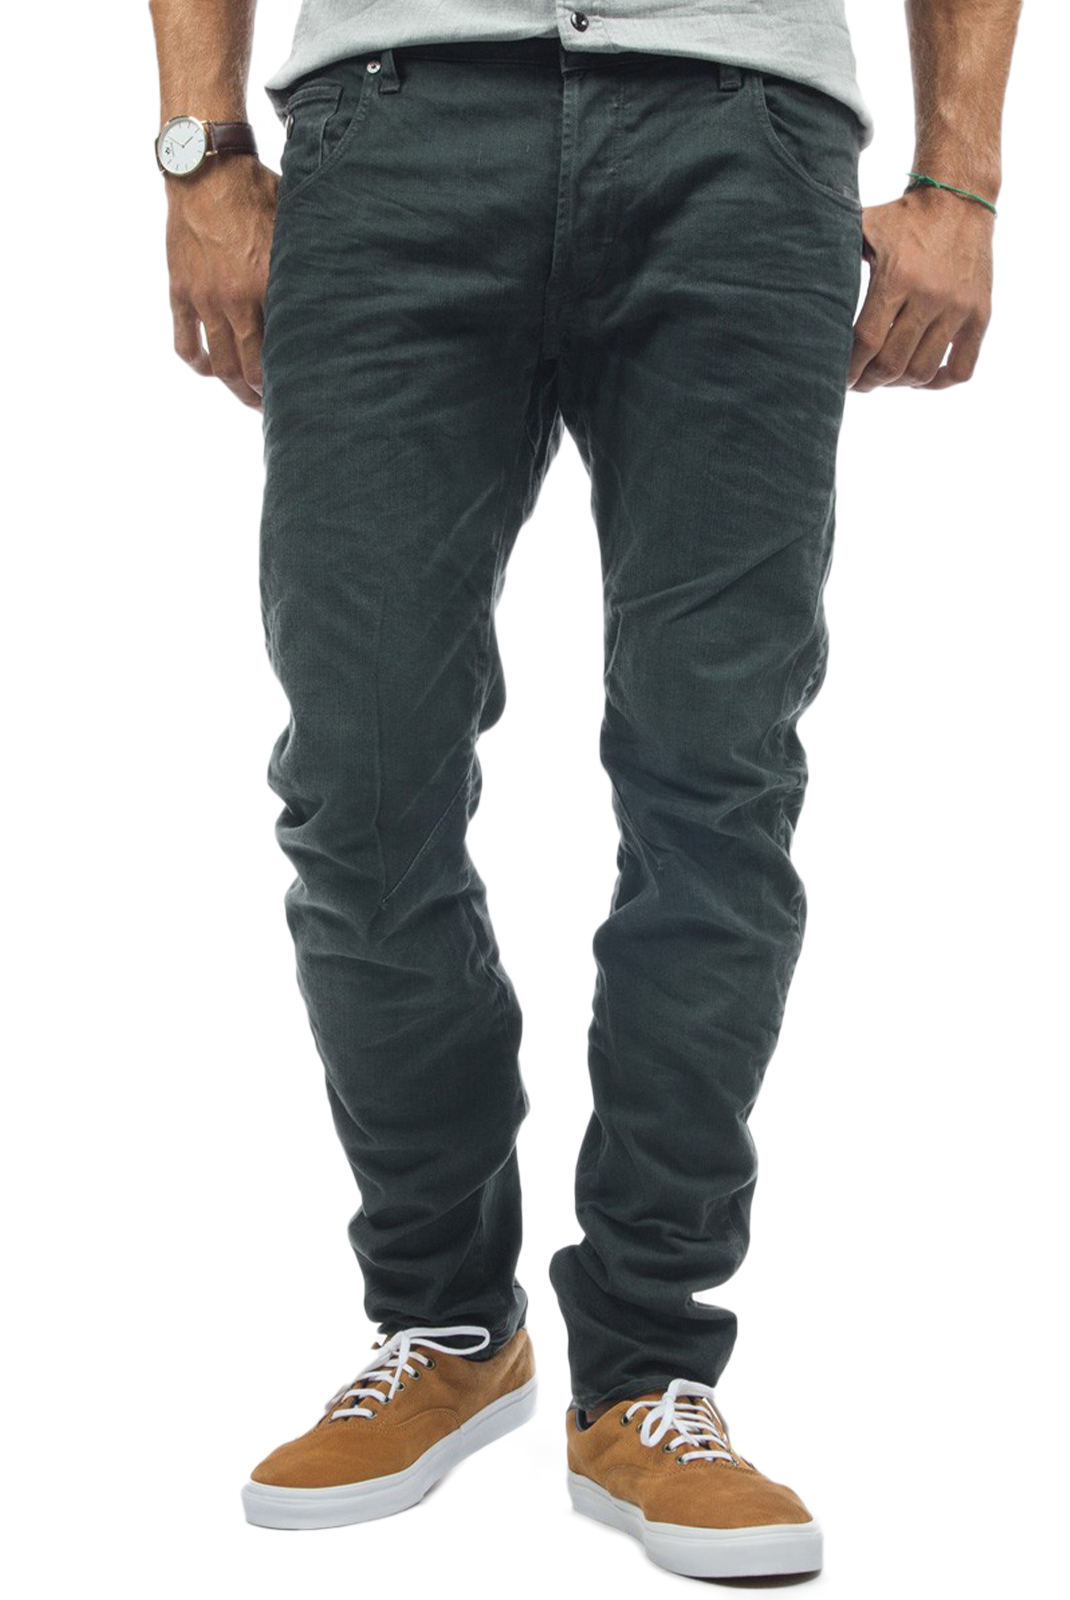 Jeans slim pour homme vert G-star - 51030f-5633-4504 Arc